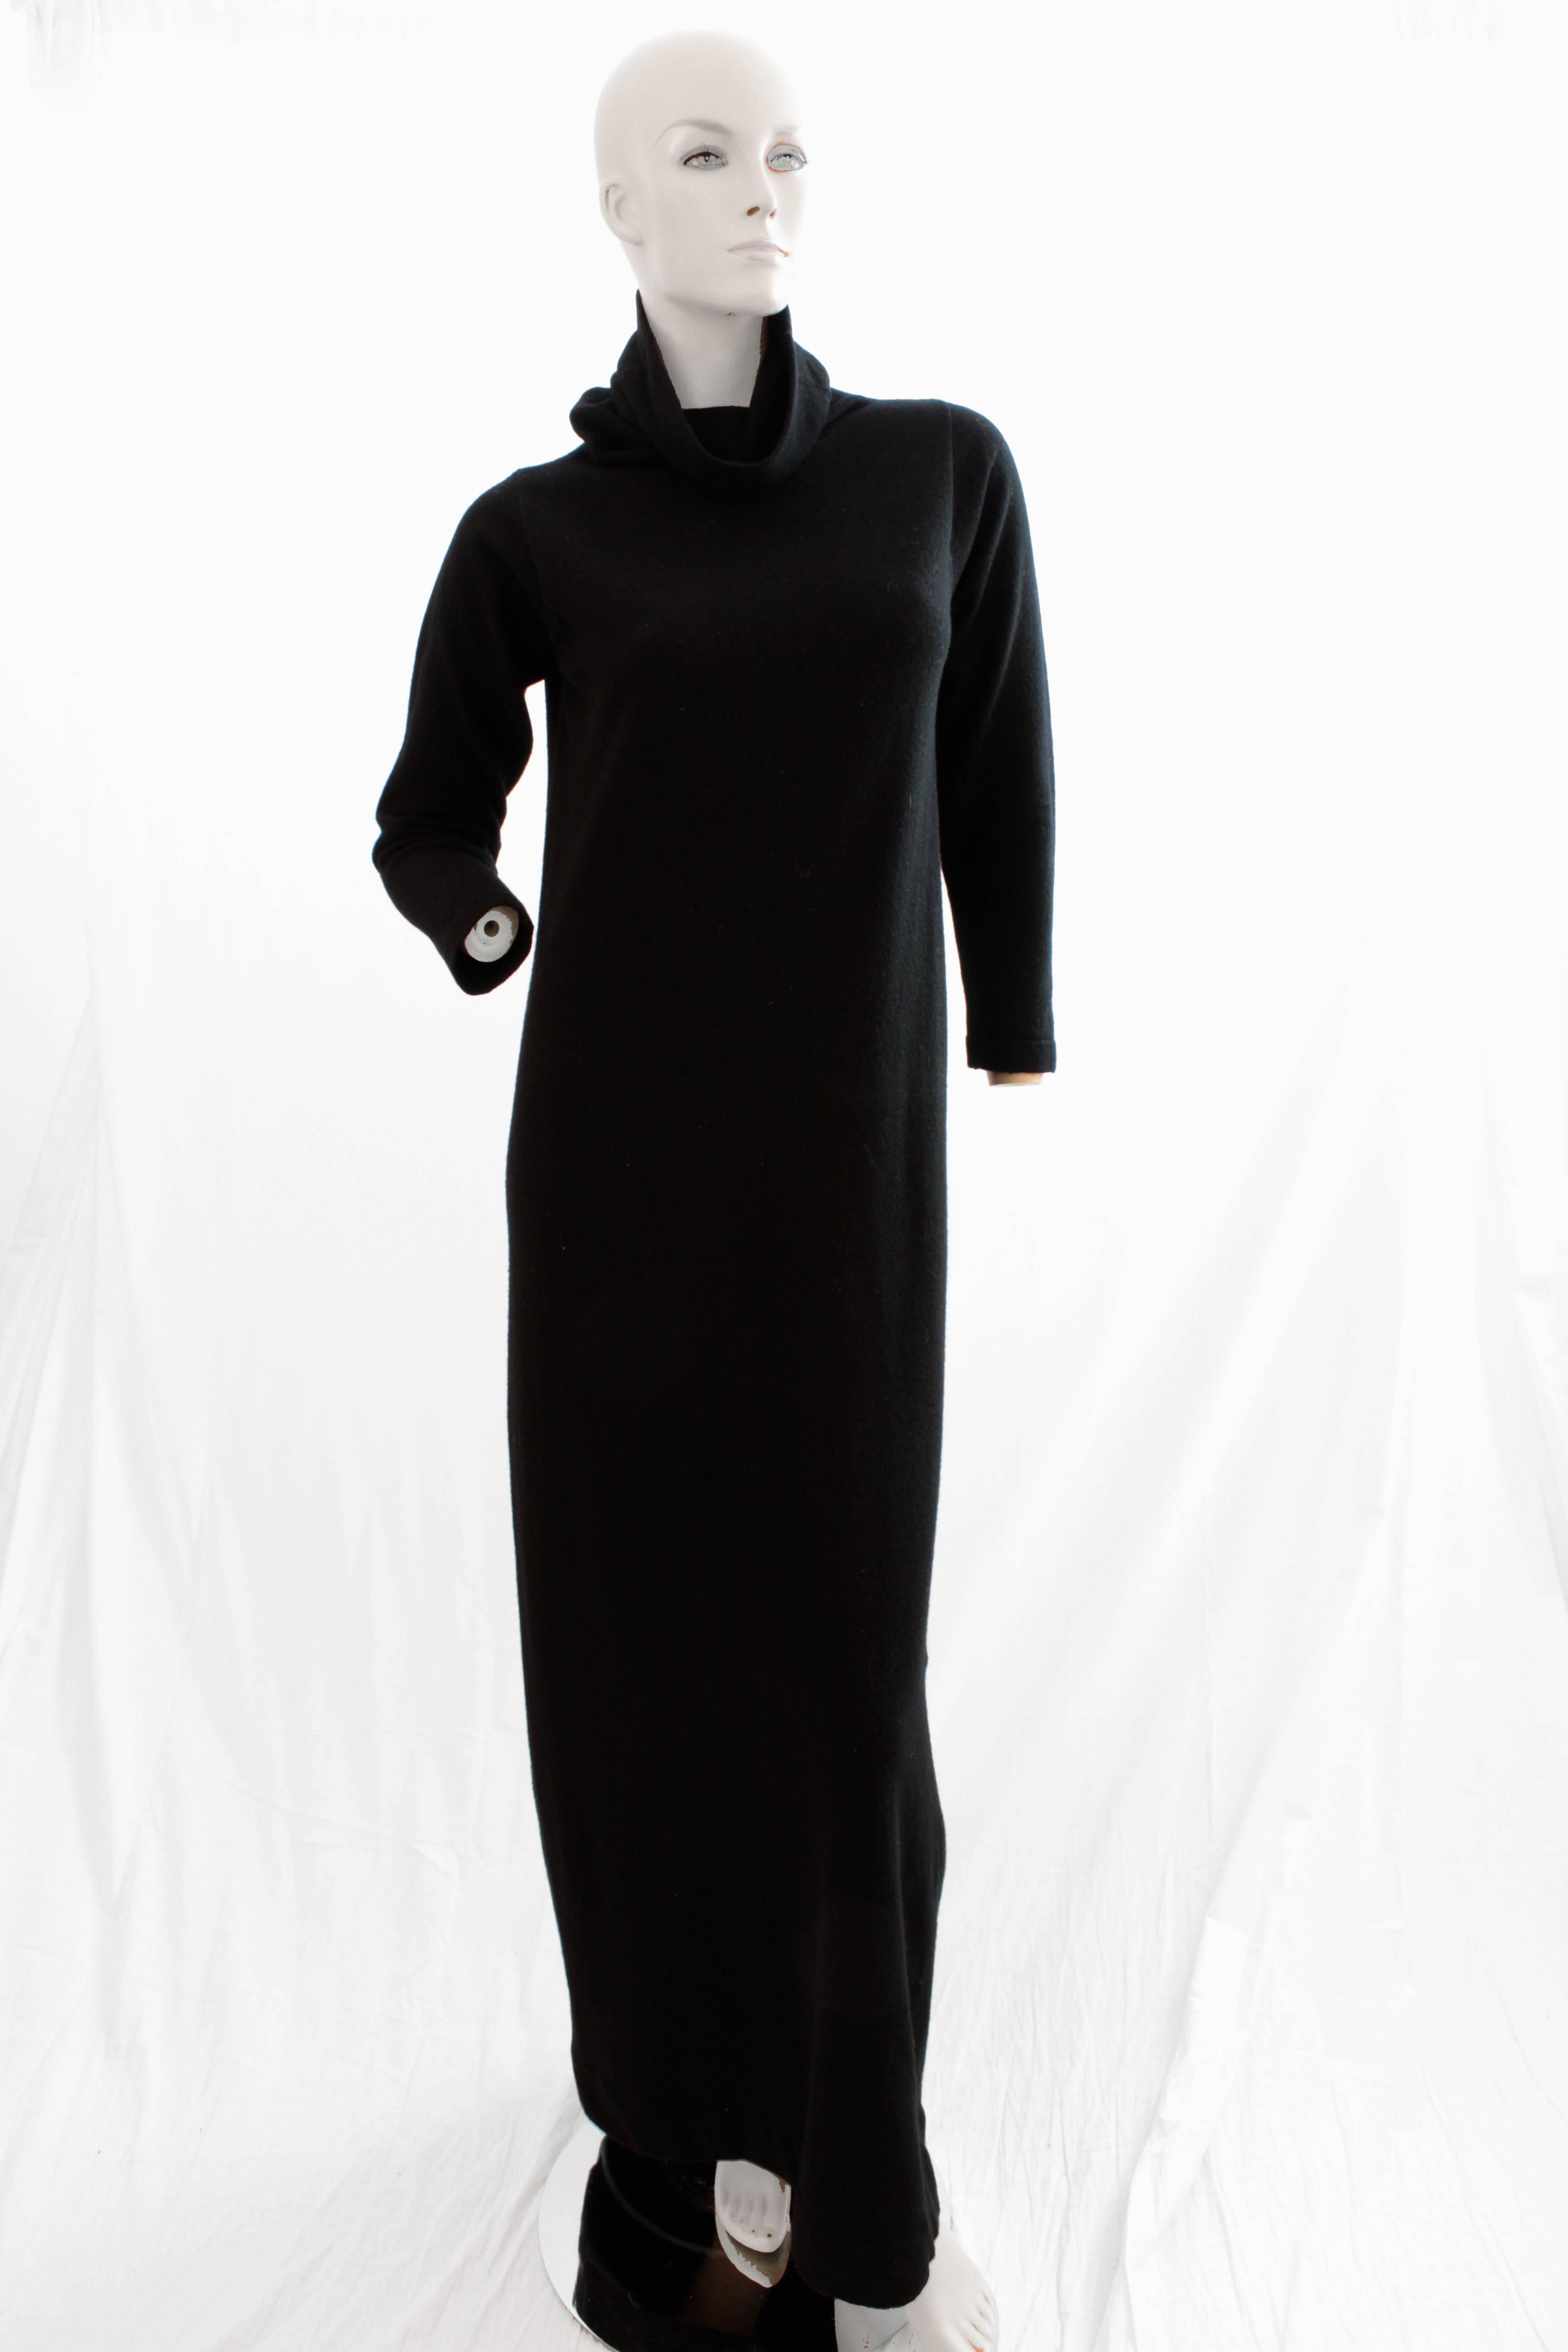 Black Bonnie Cashin Long Lambswool Knit Dress With Madonna Hood Collar Long Maxi 70s M